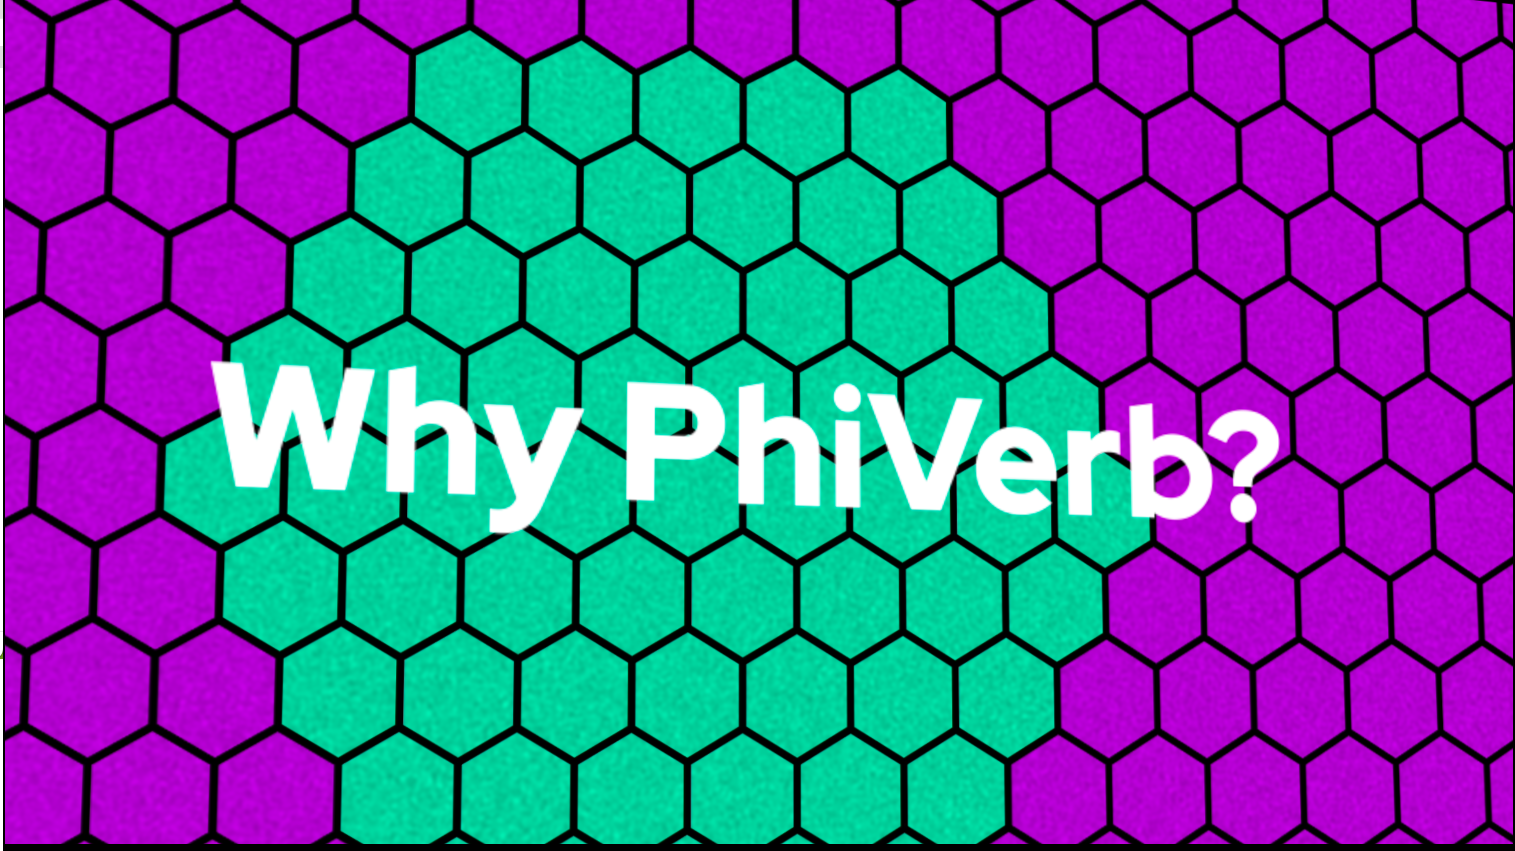 What sets PhiVerb apart